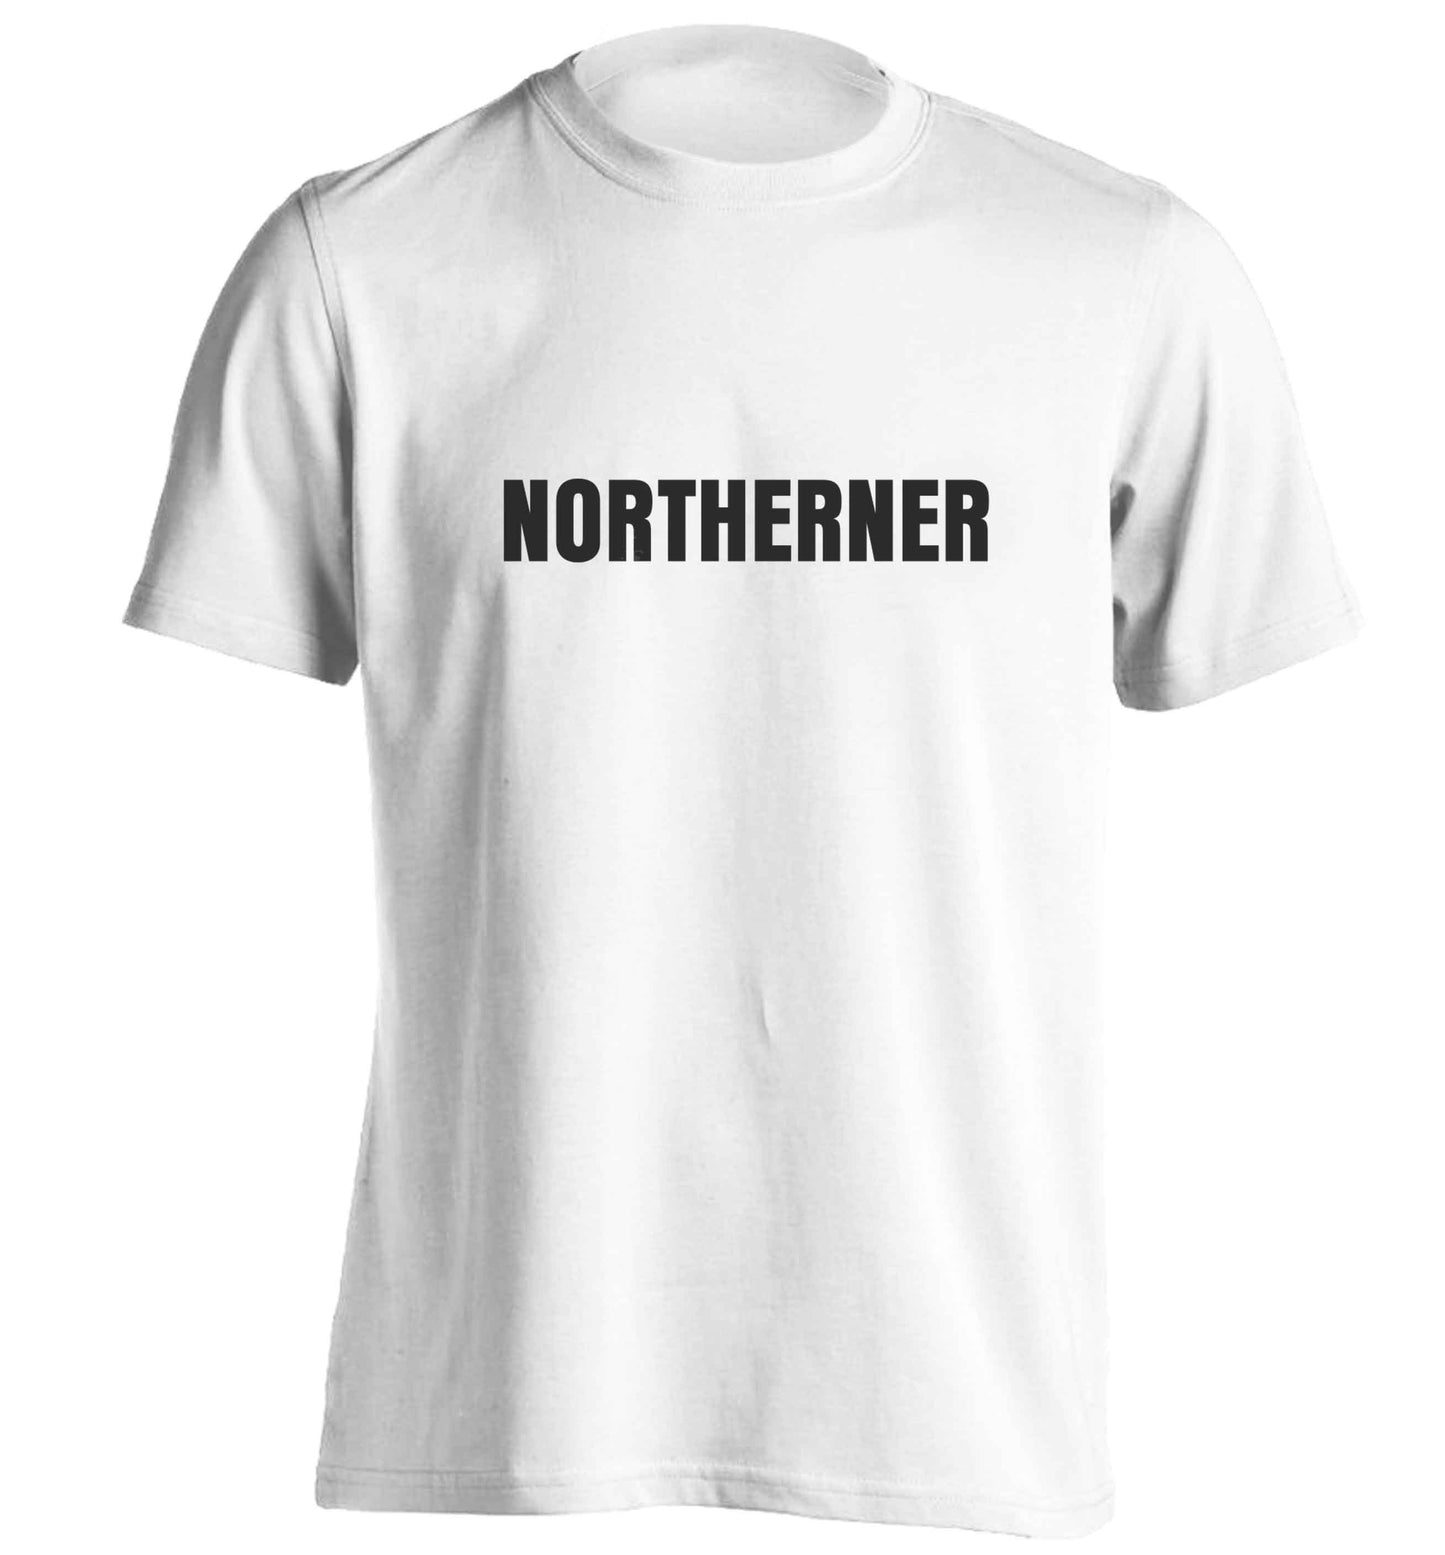 Northerner adults unisex white Tshirt 2XL